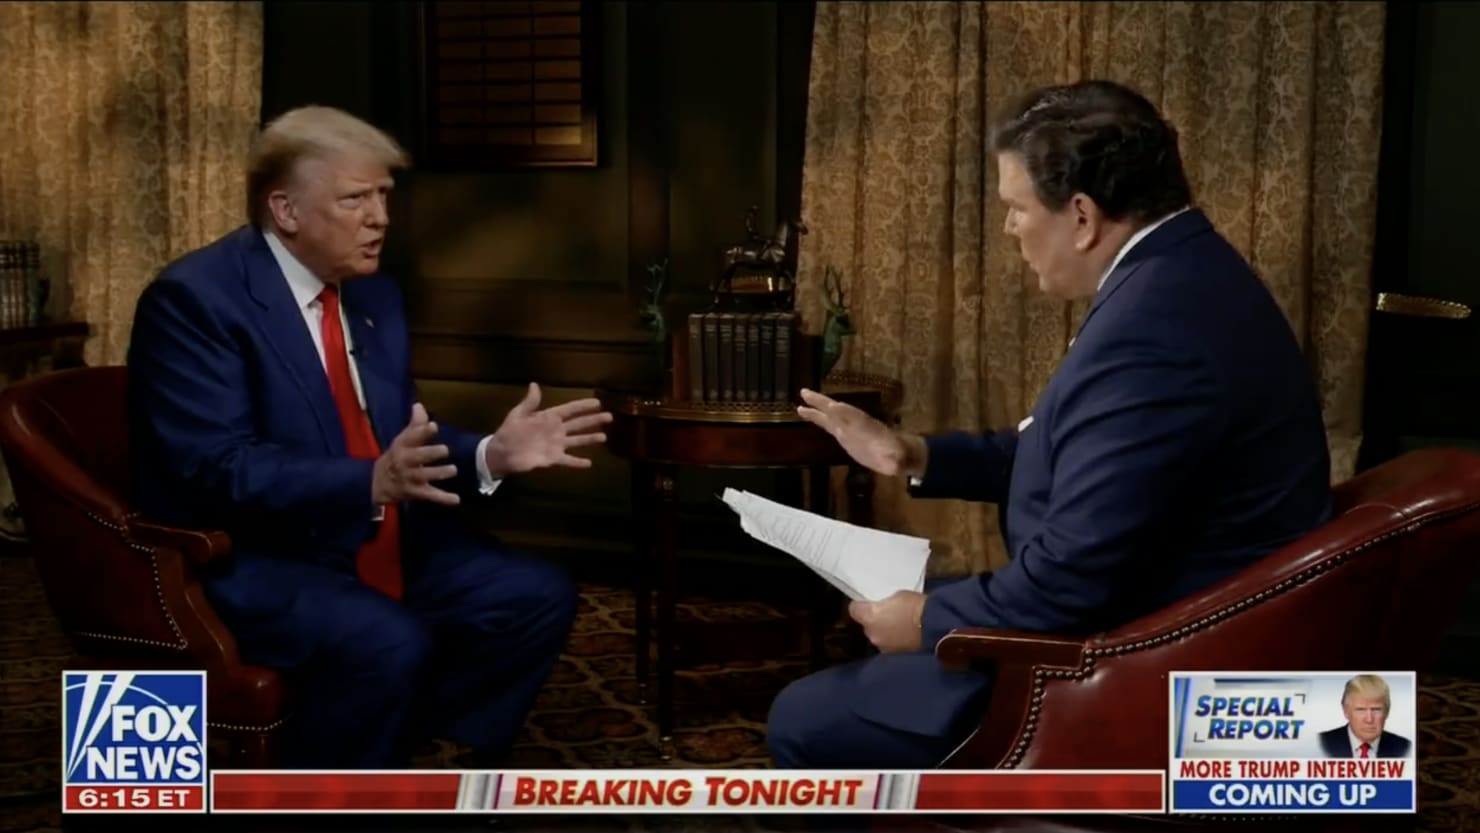 Trump, Fox News Anchor Bret Baier Clash in Heated Interview